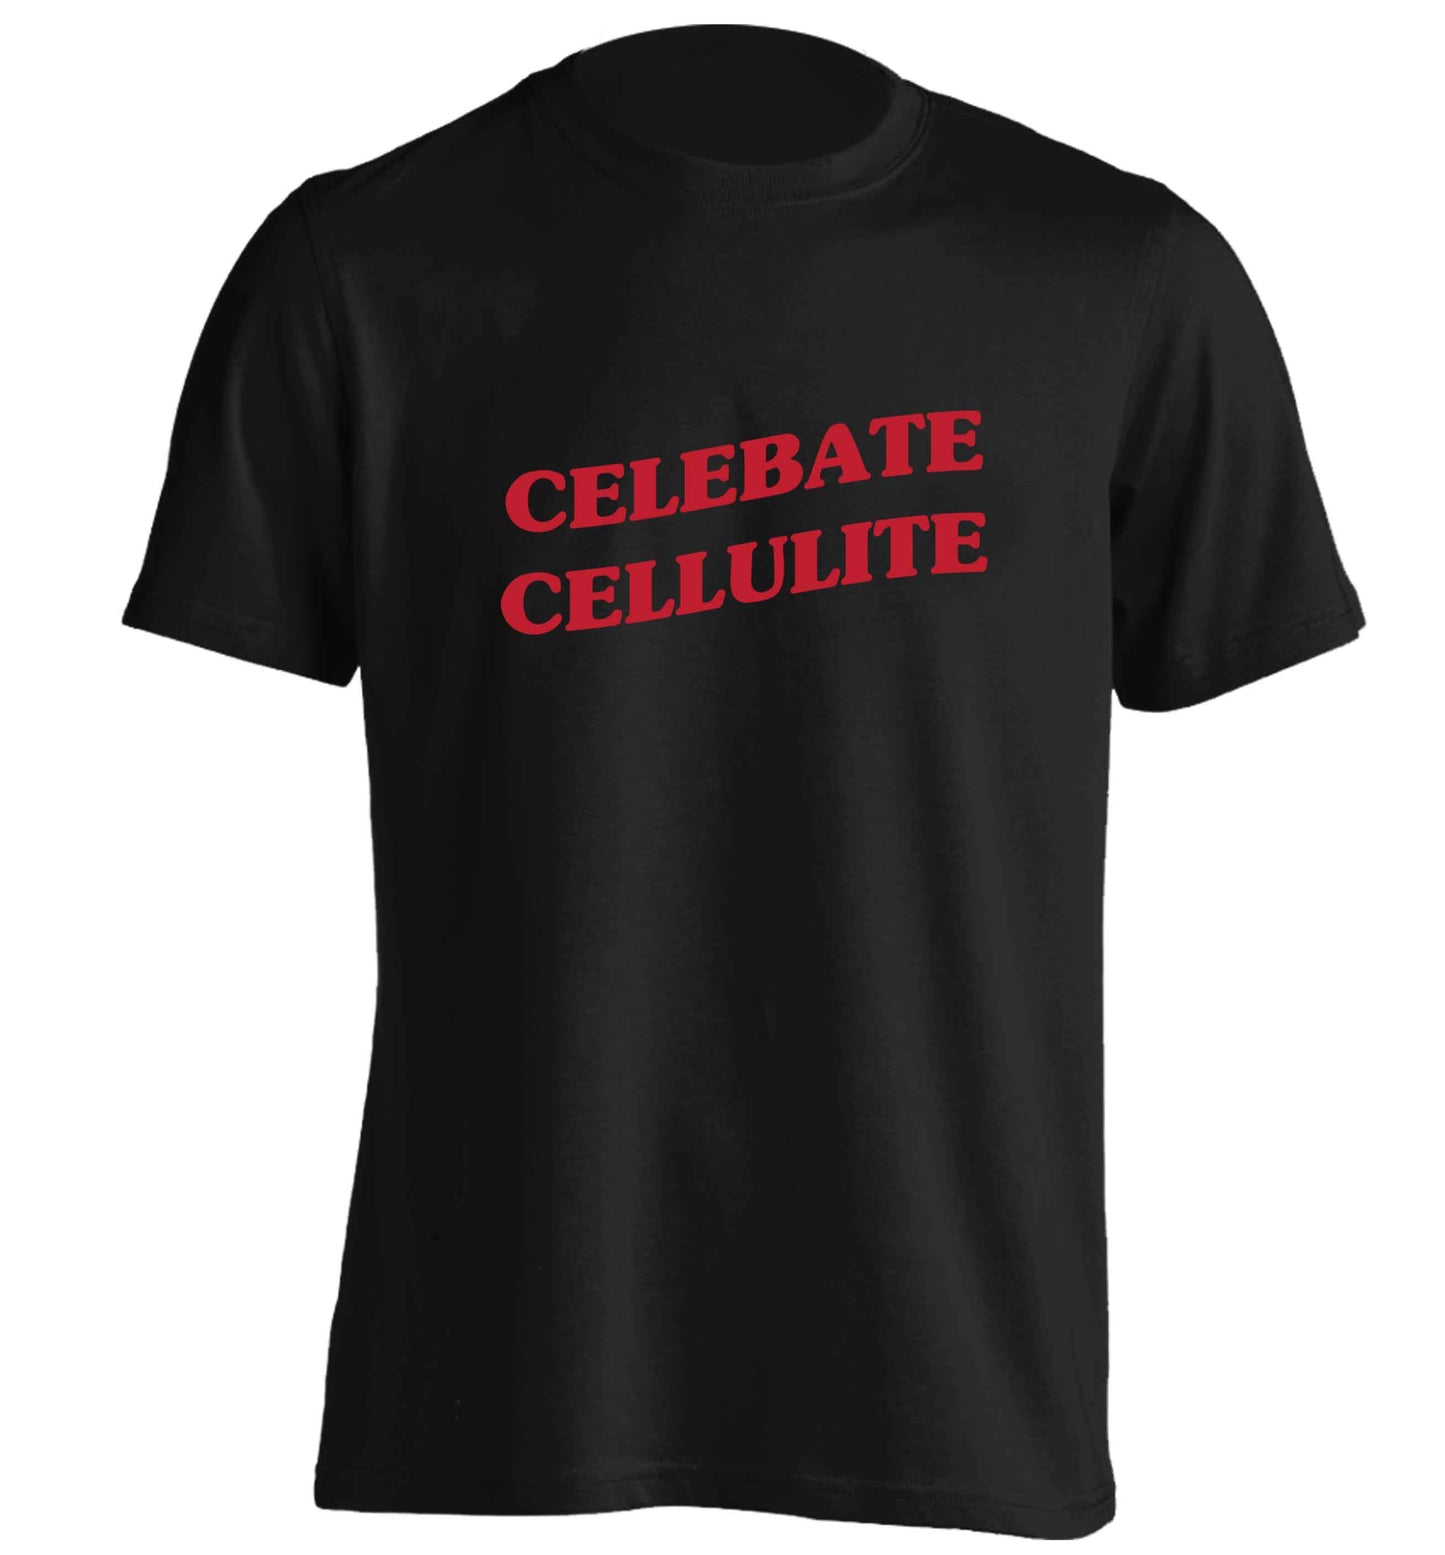 Celebrate cellulite adults unisex black Tshirt 2XL